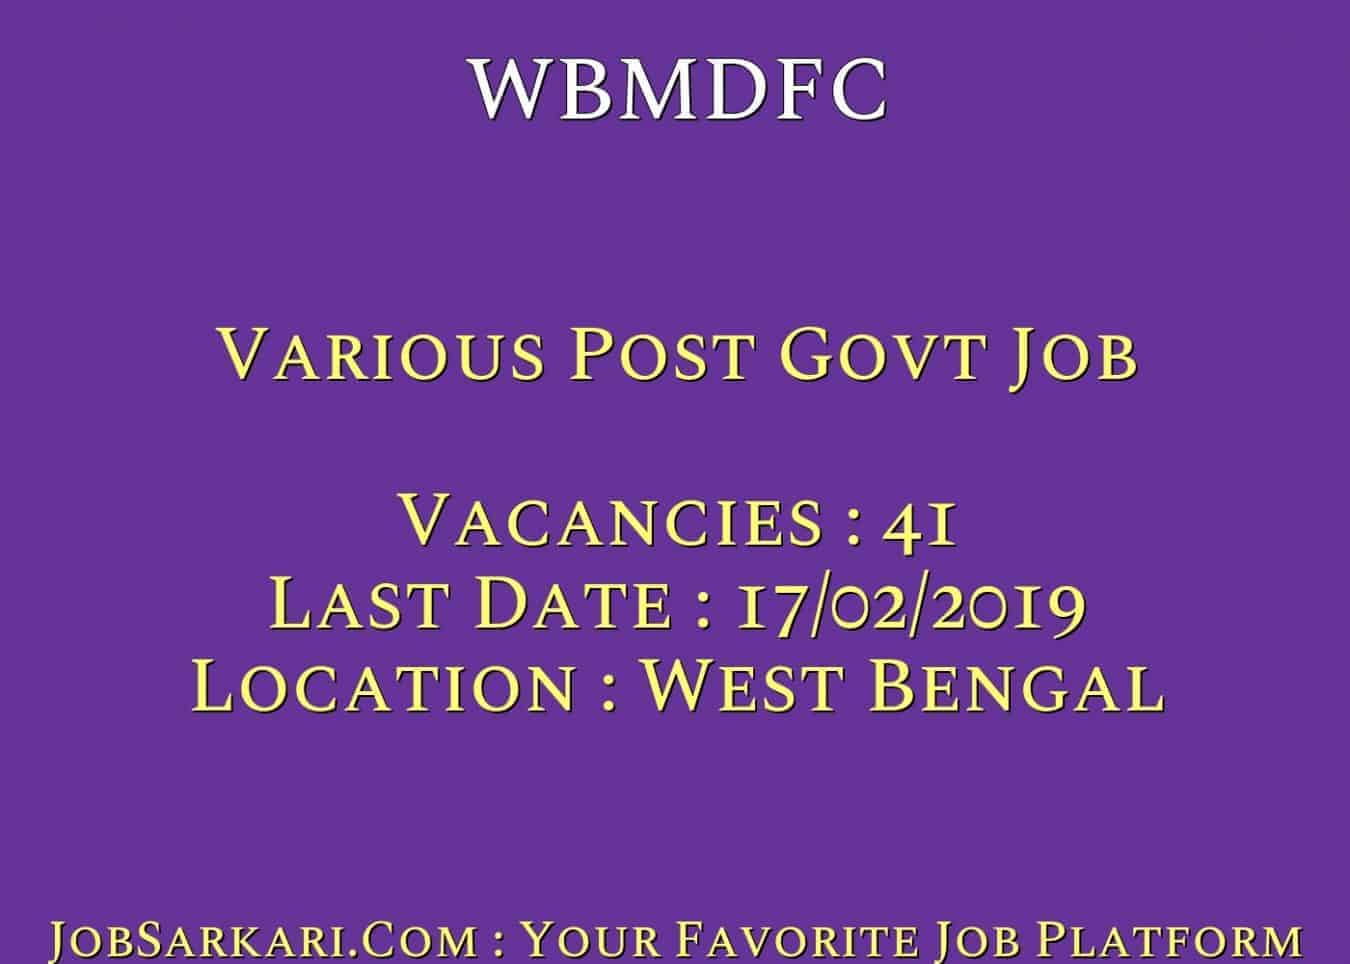 WBMDFC Recruitment 2019 For Various Post Govt Job